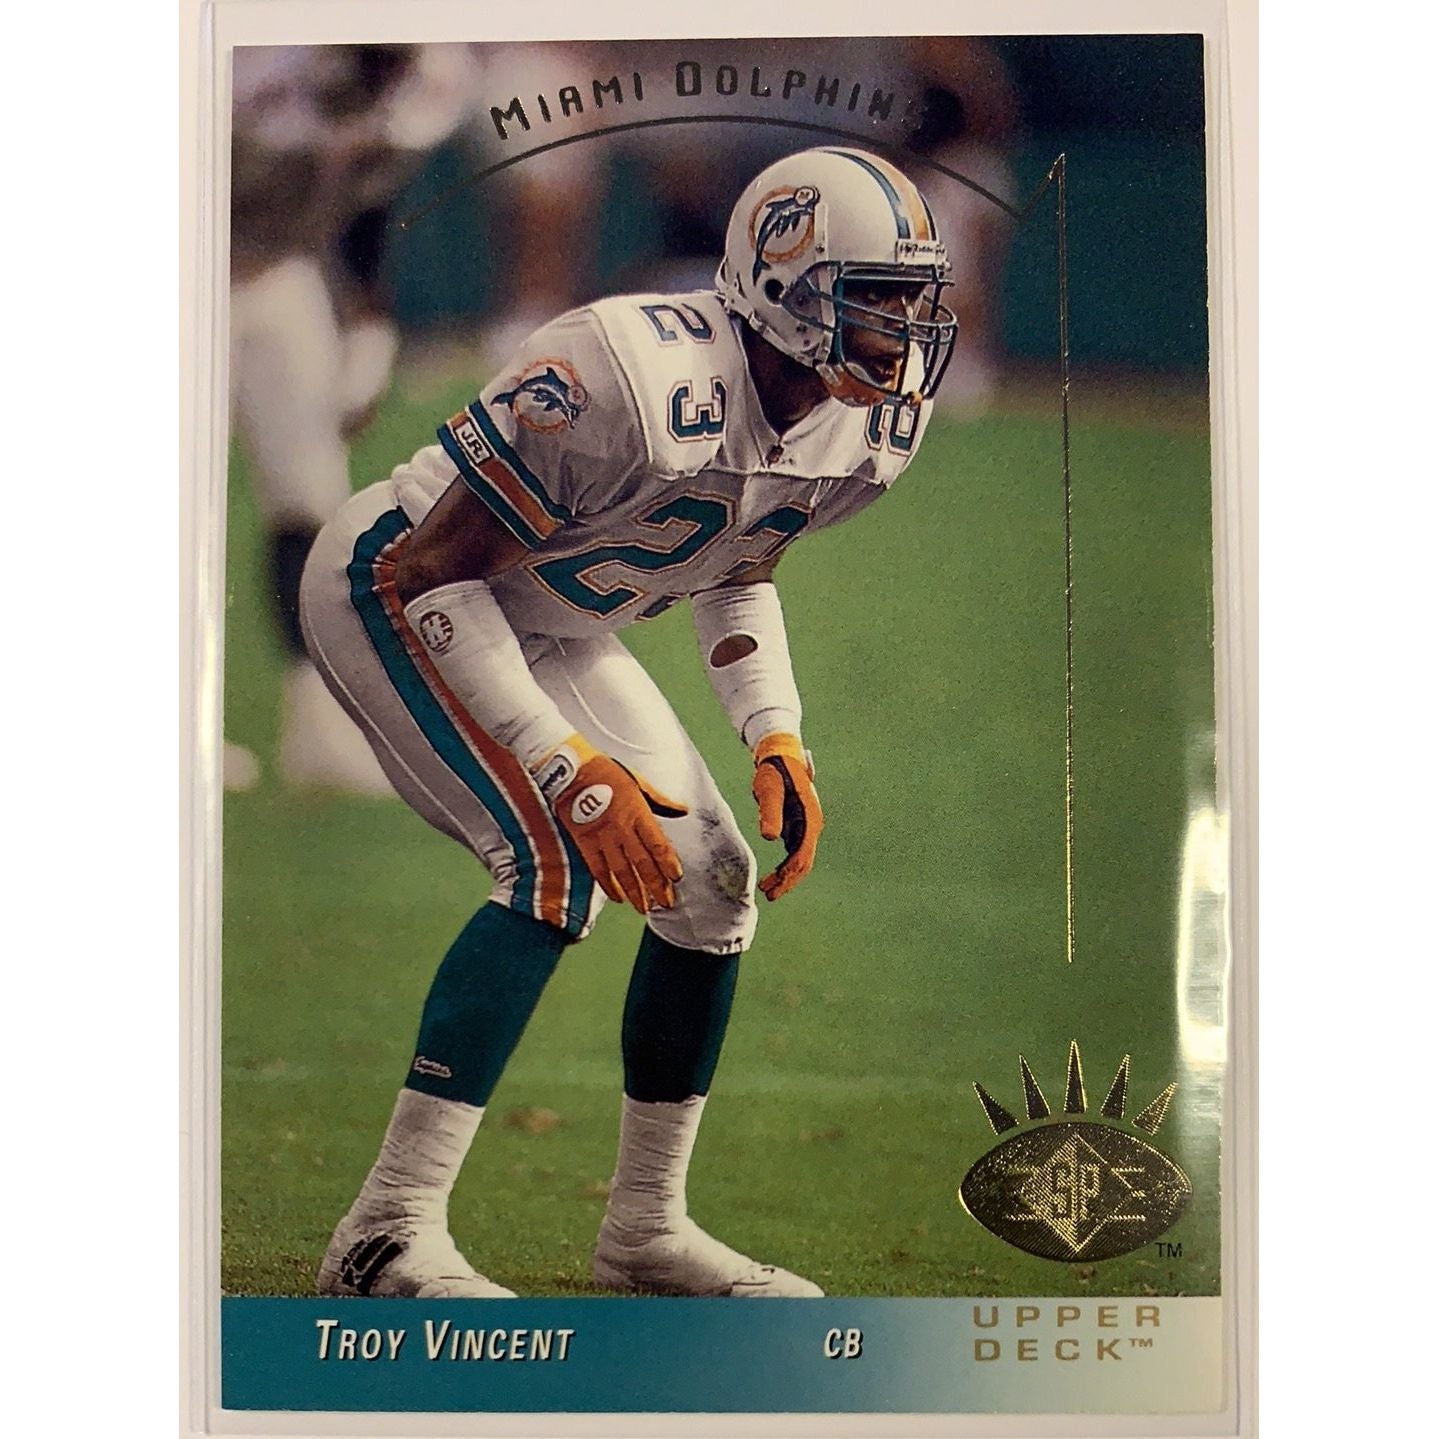  1993 Upper Deck Troy Vincent Base #153  Local Legends Cards & Collectibles